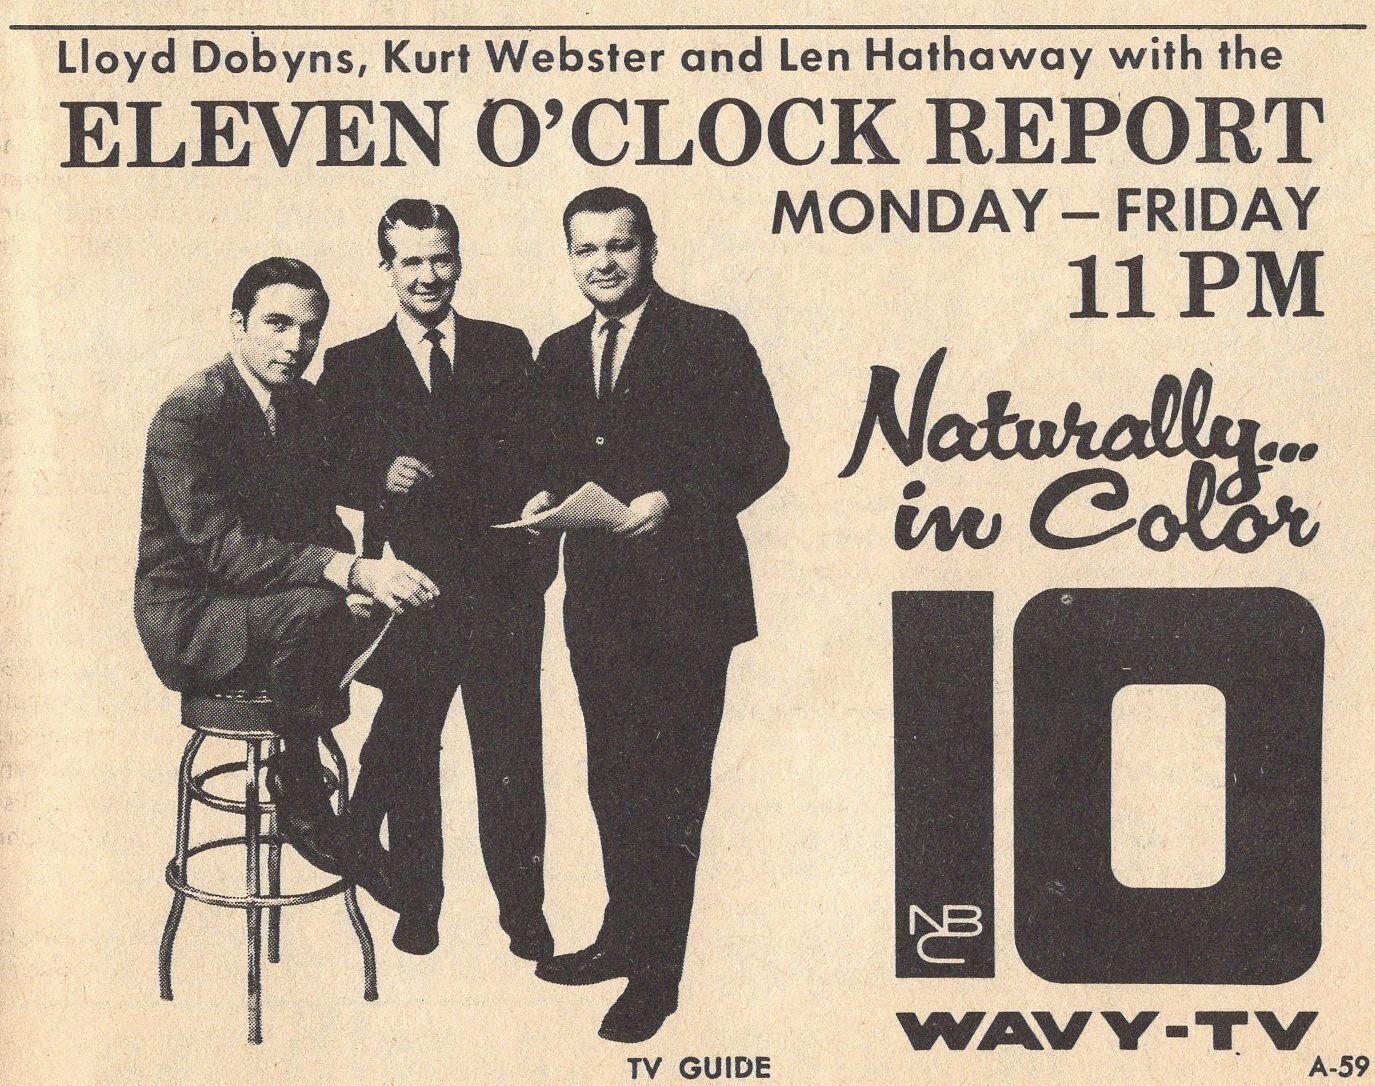 1967 WAVY TV NEWS AD LEN HATHAWAY KURT WEBSTER LLOYD DOBYNS NORFOLK,VIRGINIA